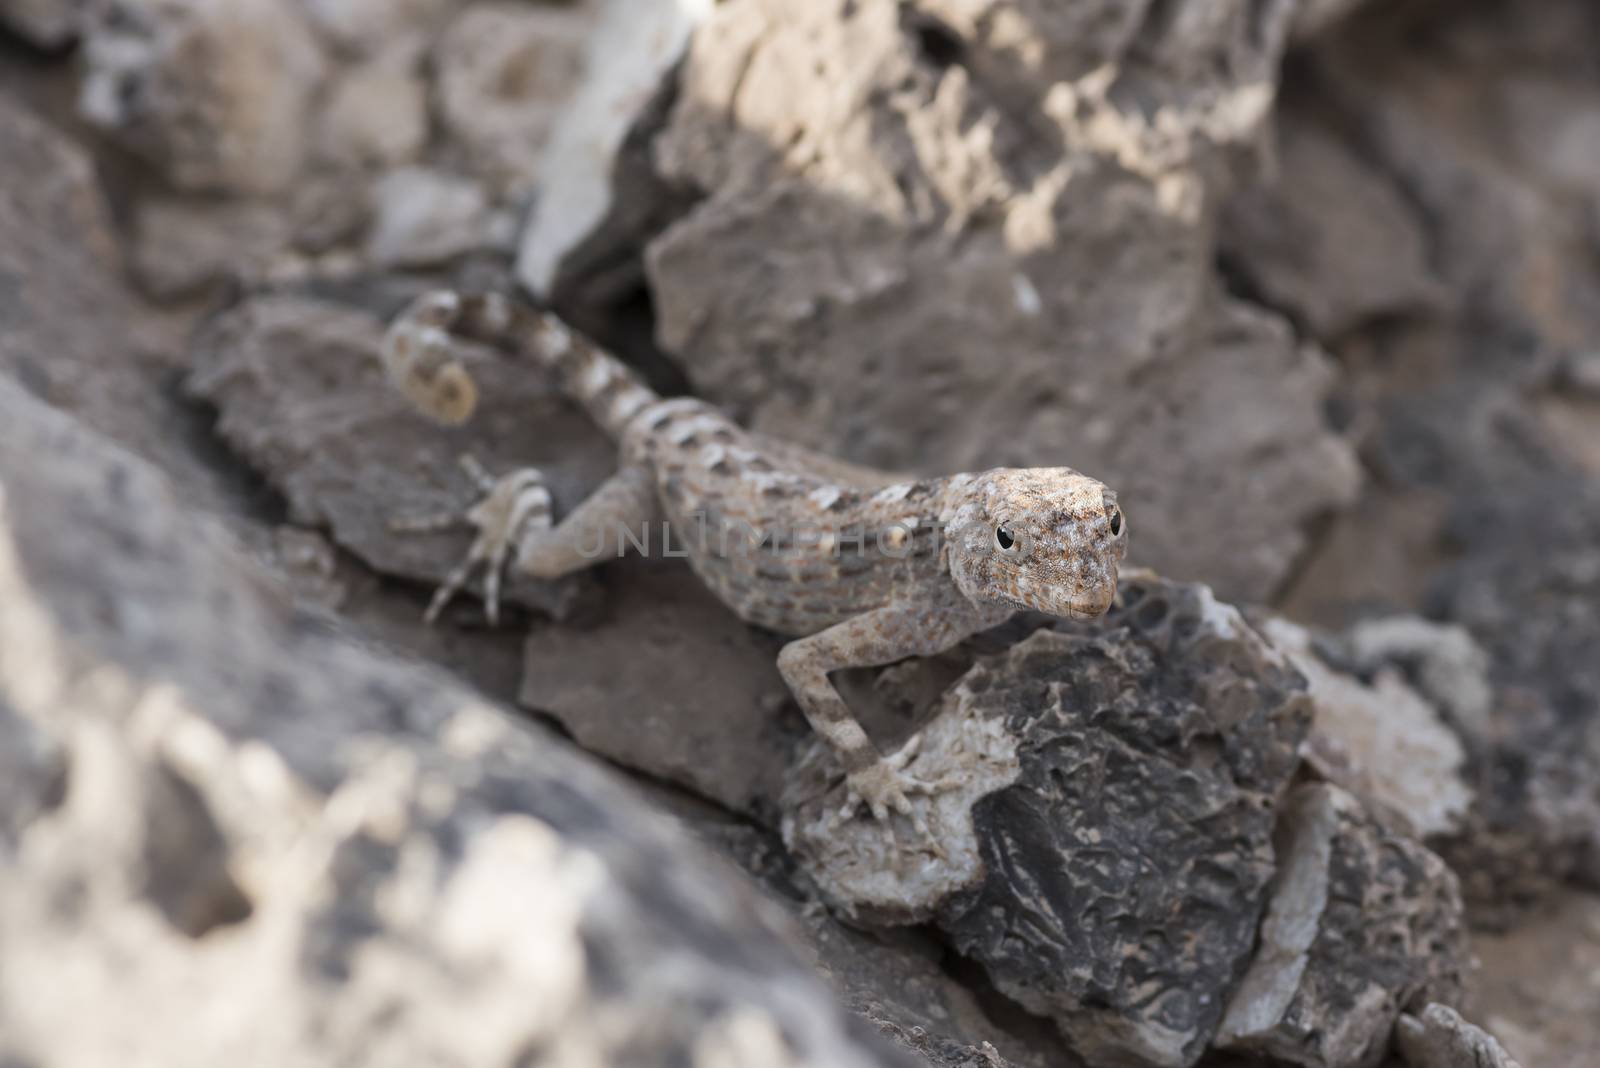 Rock semaphore gecko (Pristurus rupestris) on a rock , found in Ras Hadd, Sultanate of Oman